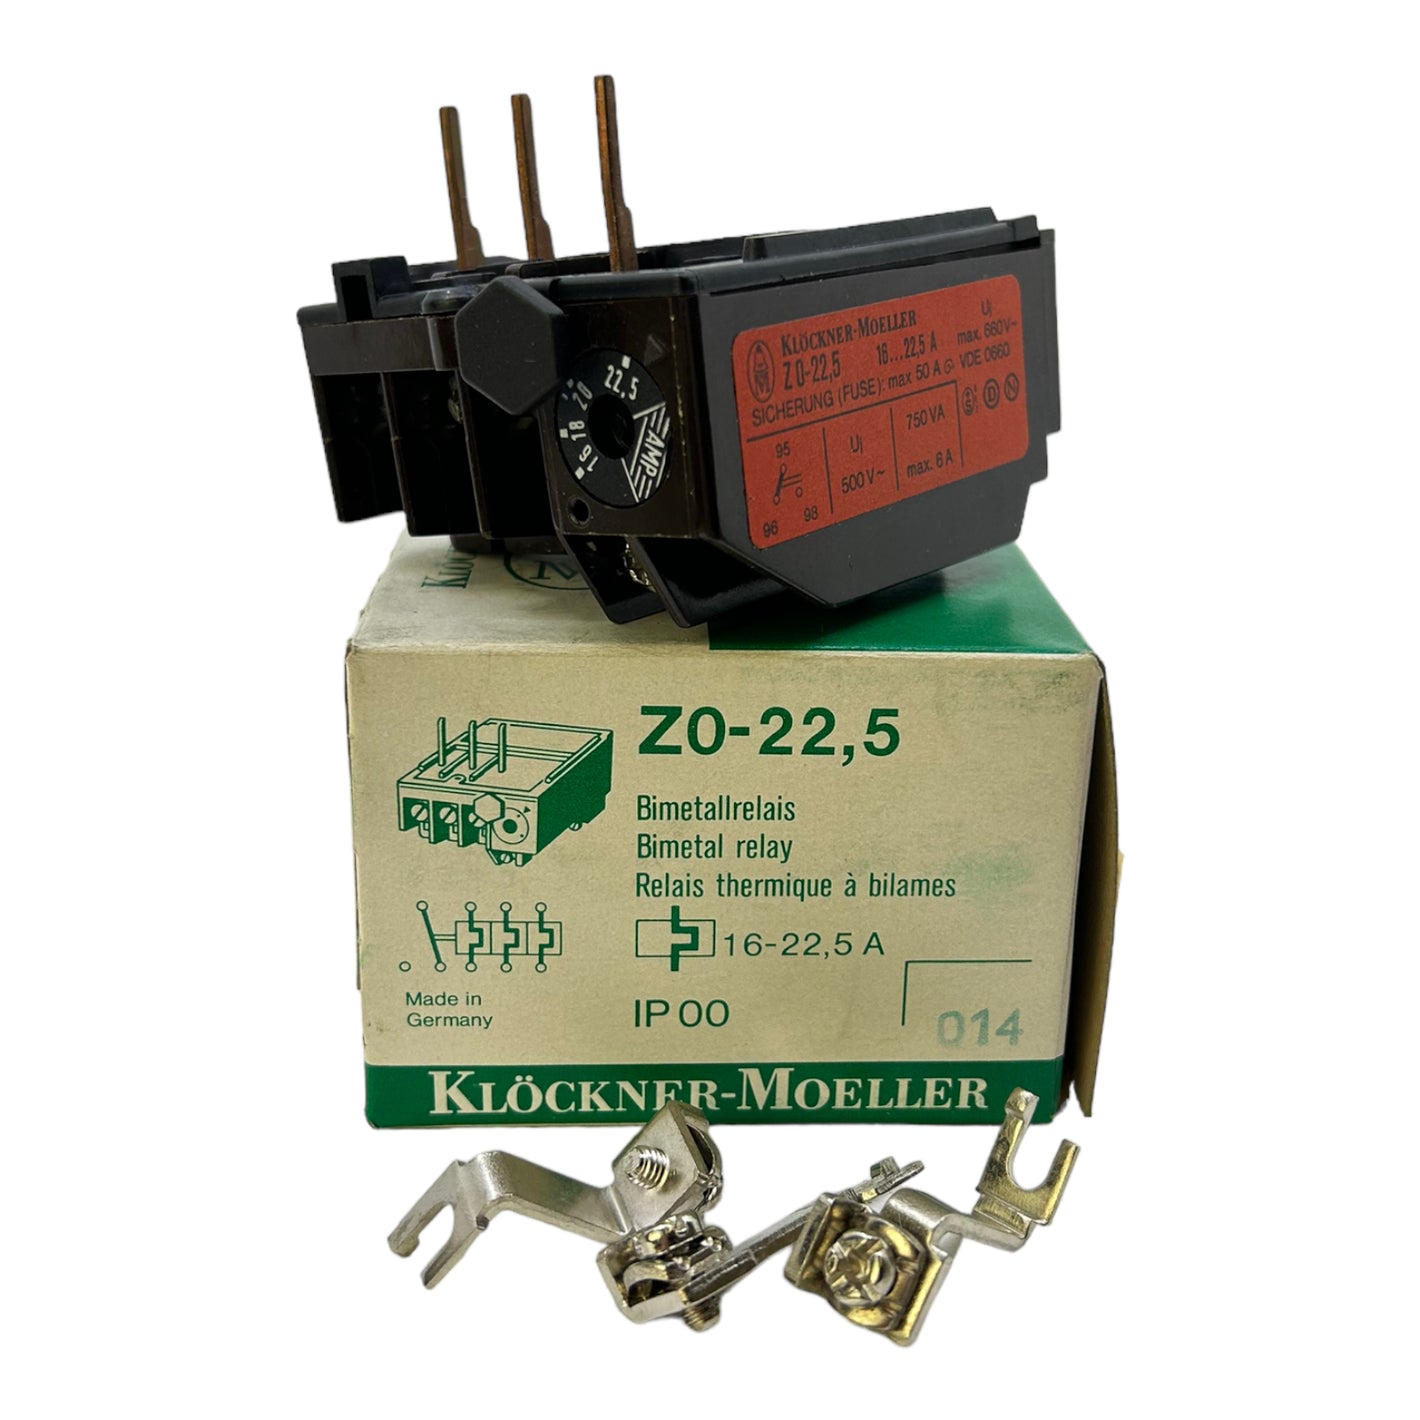 Klöckner Moeller Z0-22,5 Bimetallrelais IP00 750VA 16…22,5A Bimetallrelais